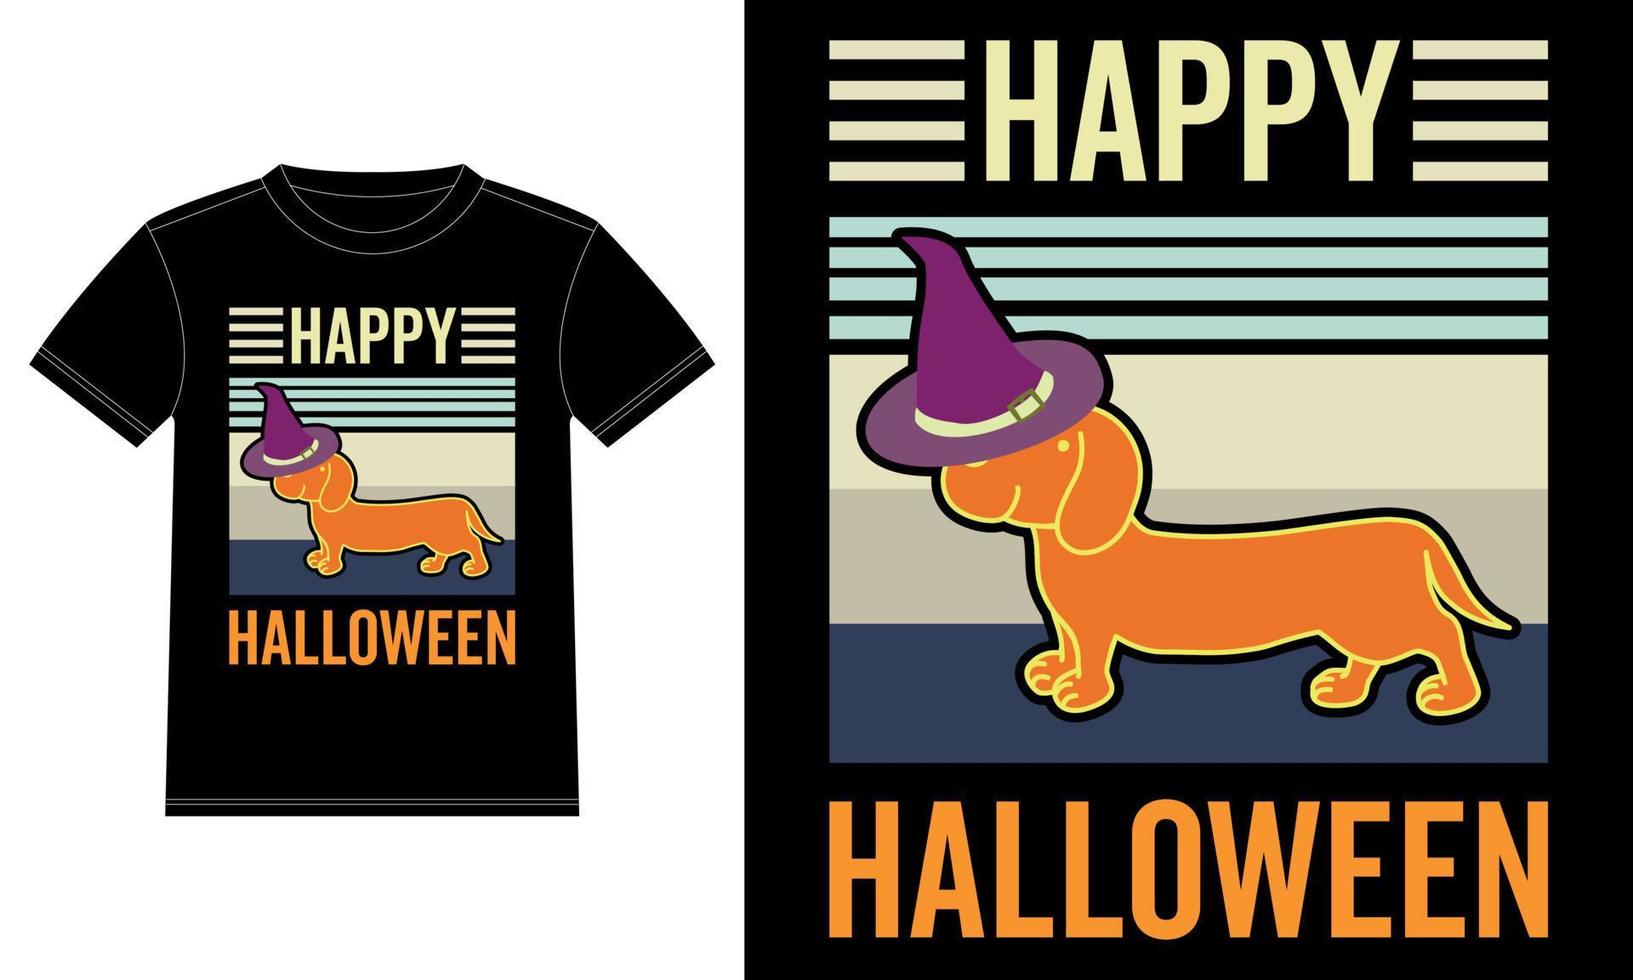 Dachshund on Halloween Cape Funny Vintage Happy Halloween T-Shirt vector